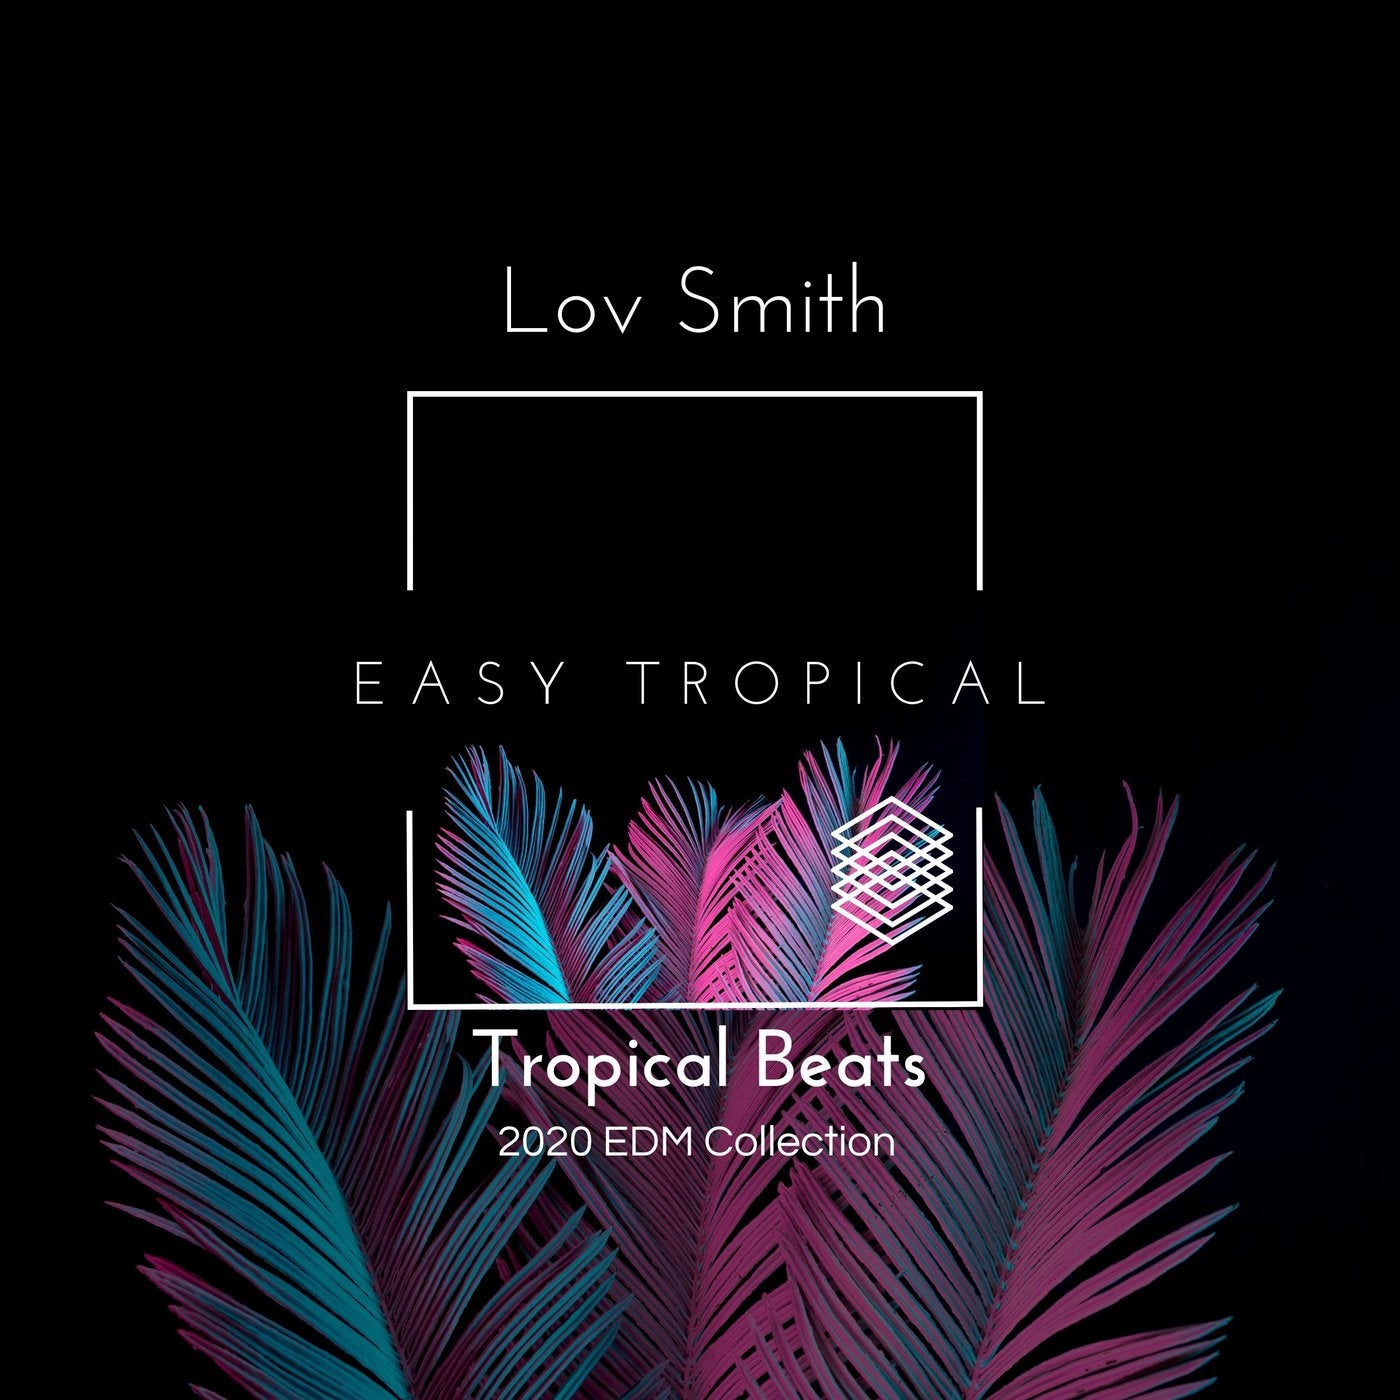 Tropical Beats - 2020 EDM Collection